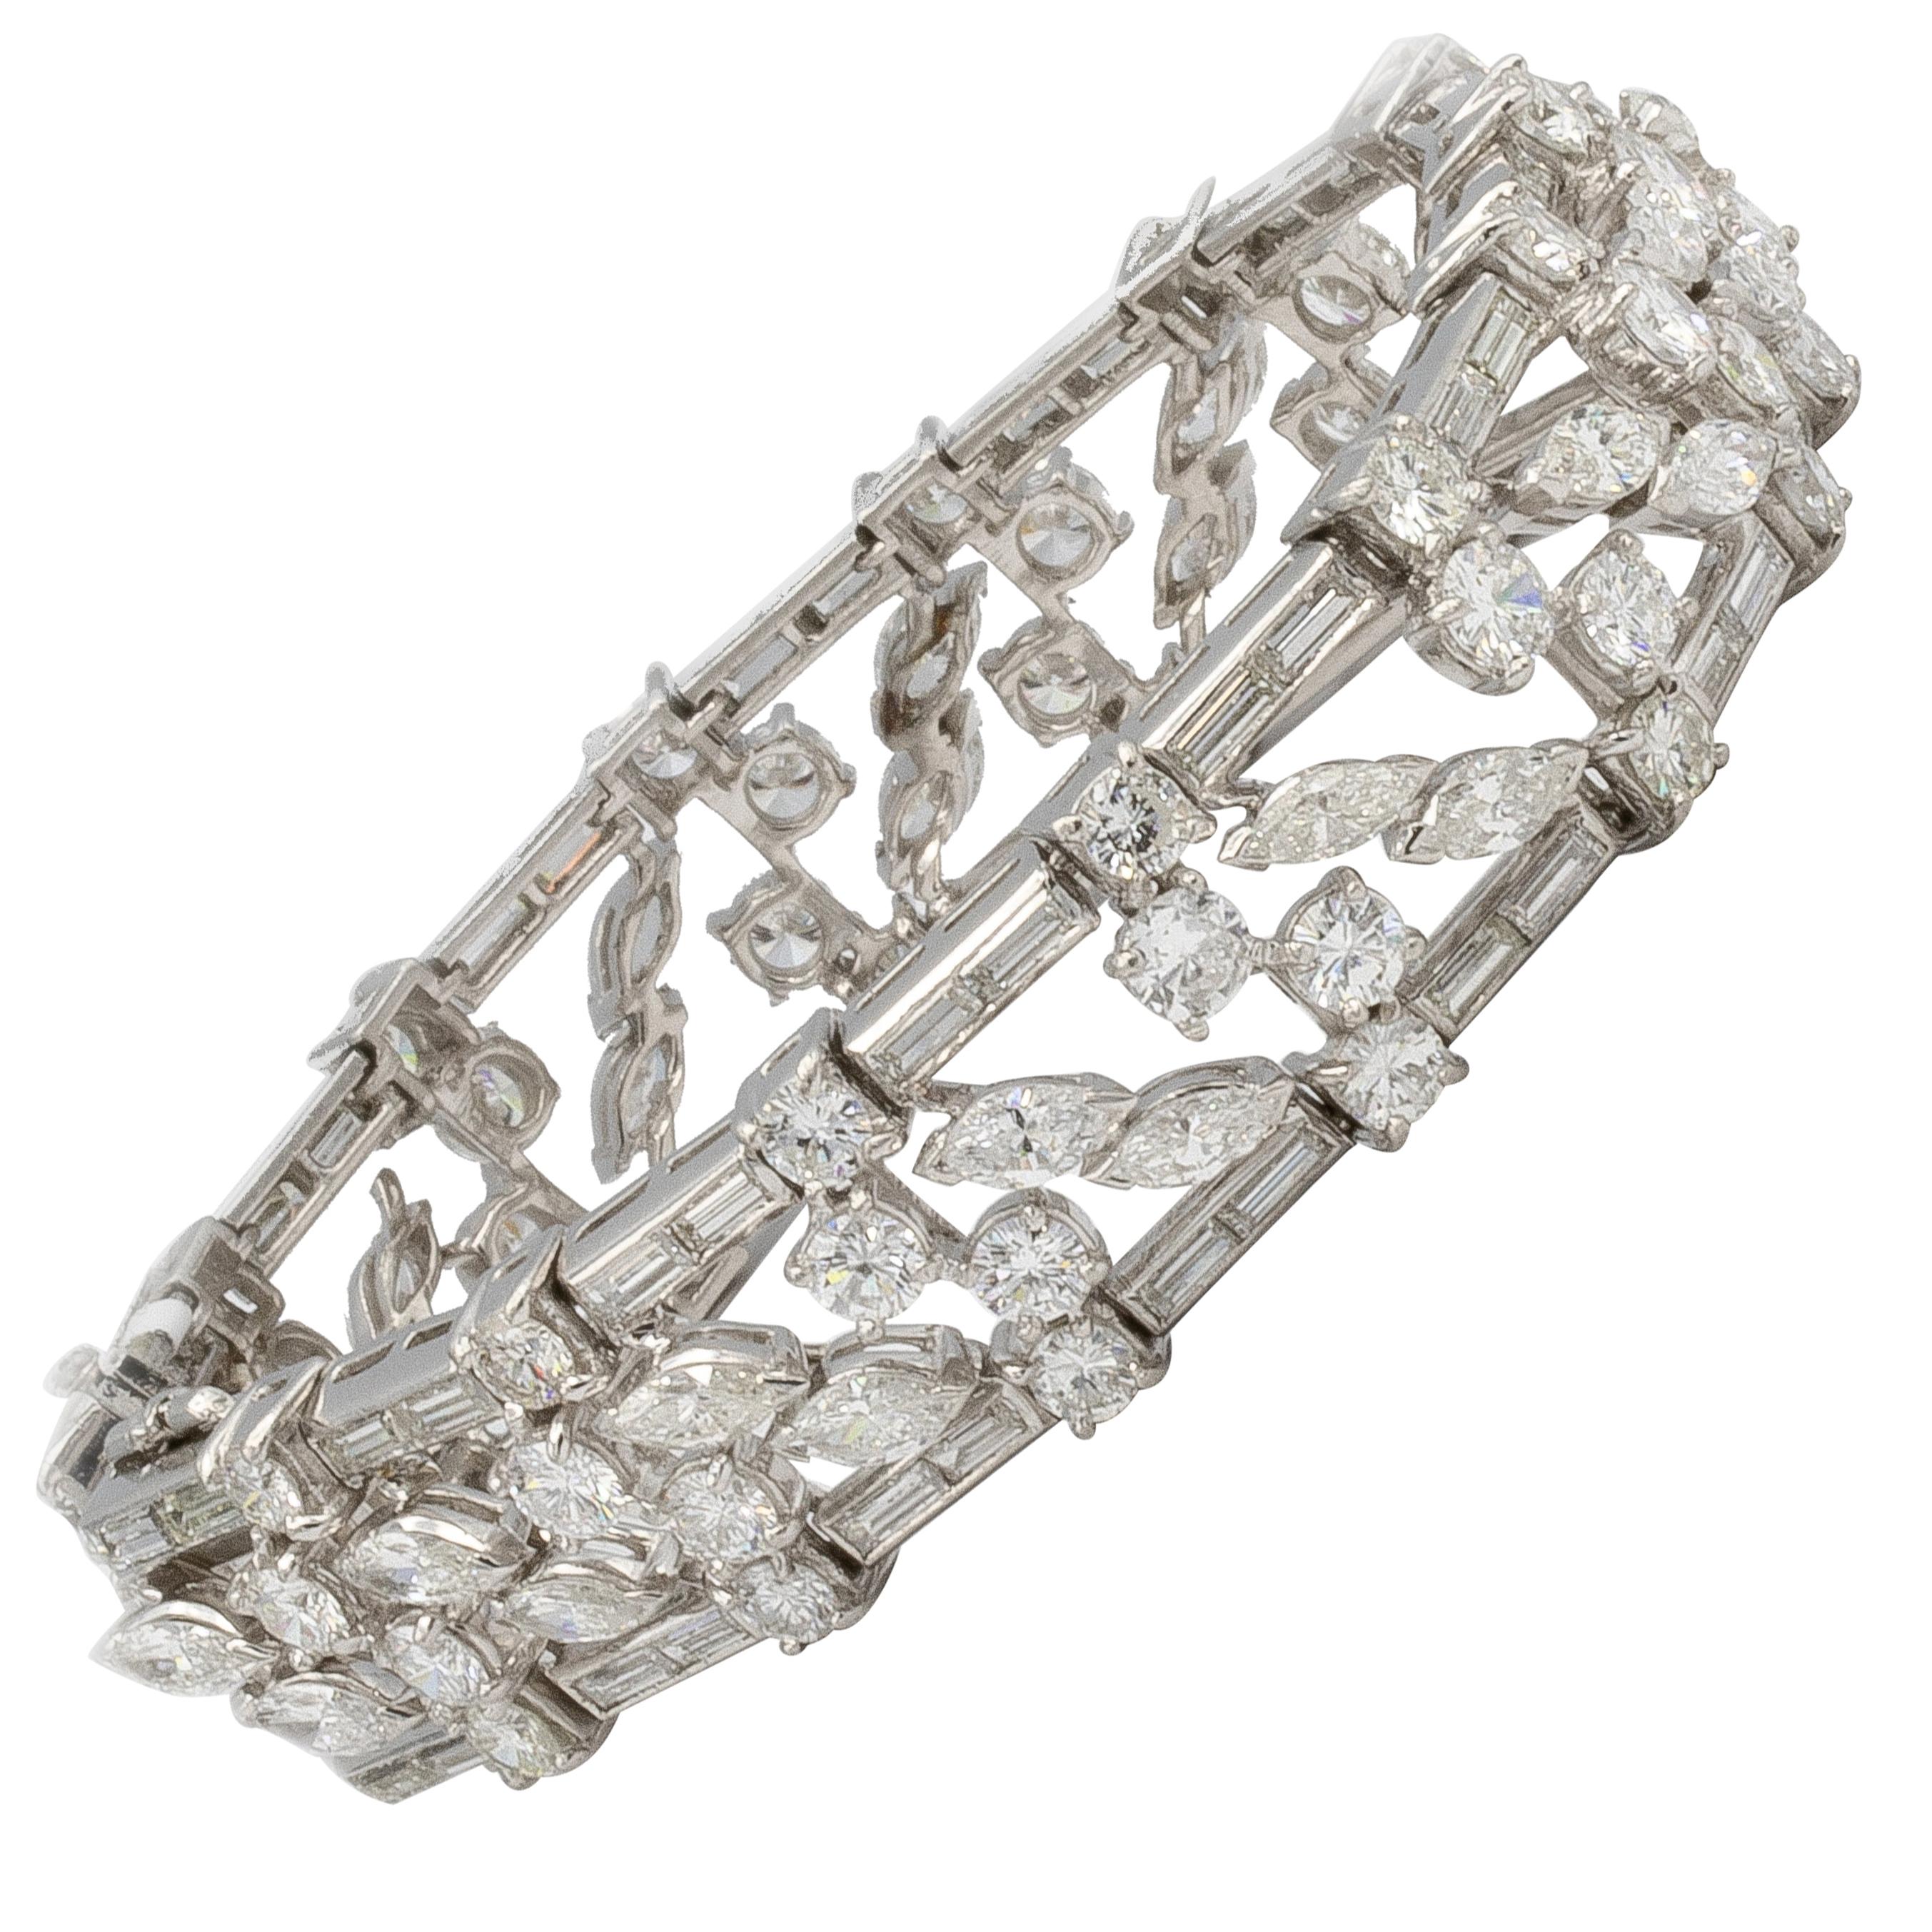 Elegant Handmade Platinum Bracelet With 24.7 Carats Of Diamonds 